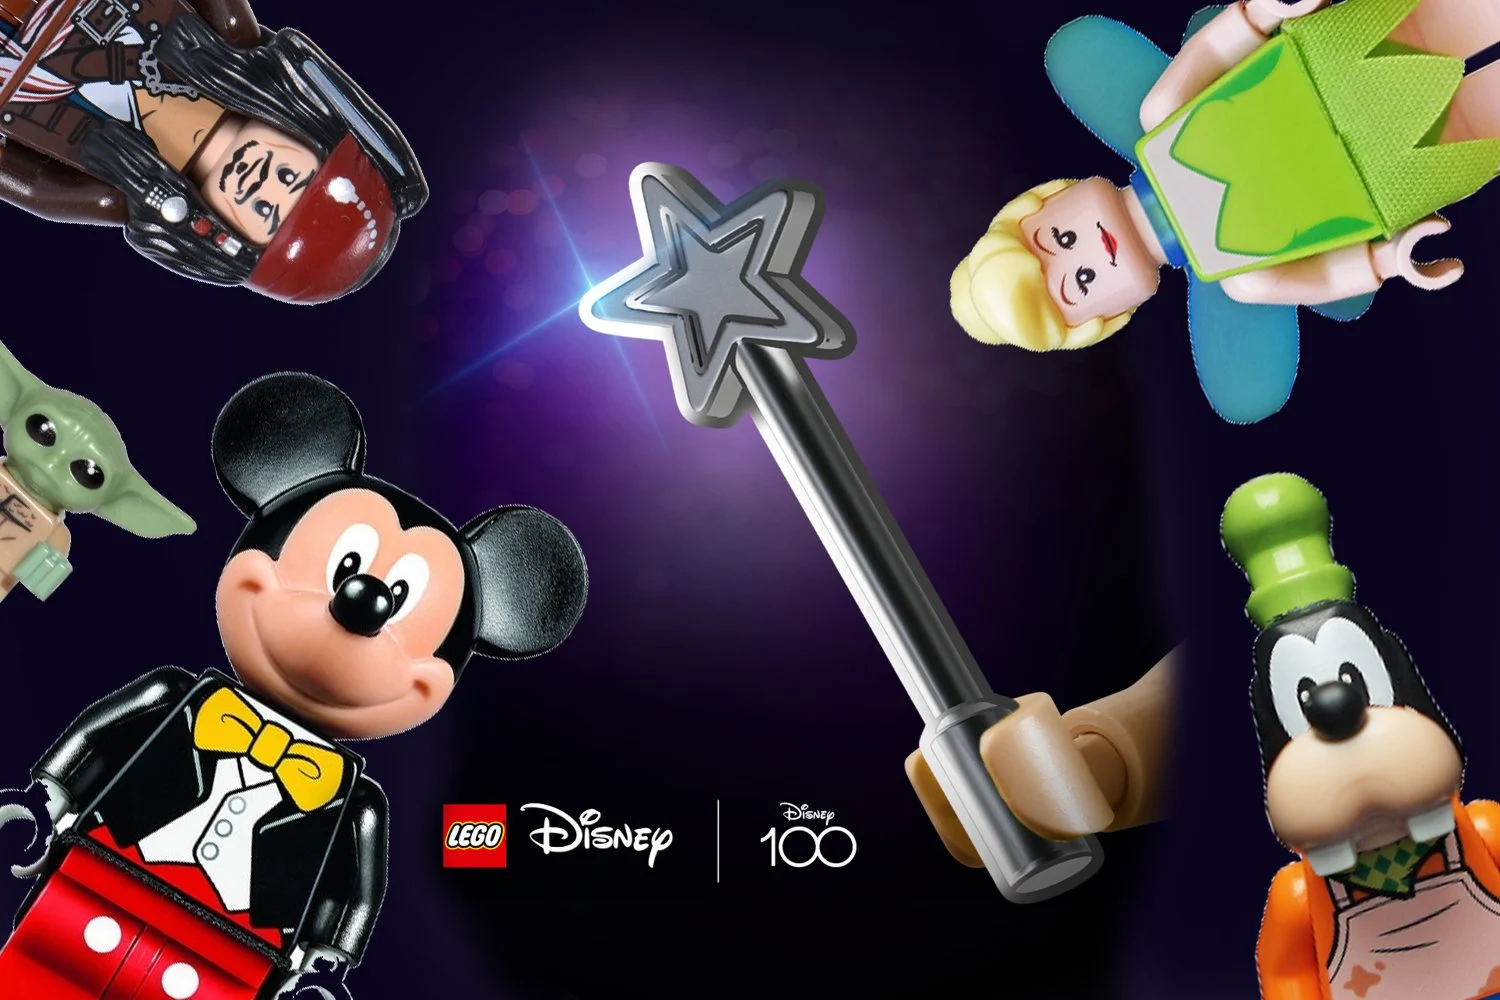 LEGO Disney Minifigure Series 3 ‘100th Anniversary’: Rumors and Predictions (January 2023)